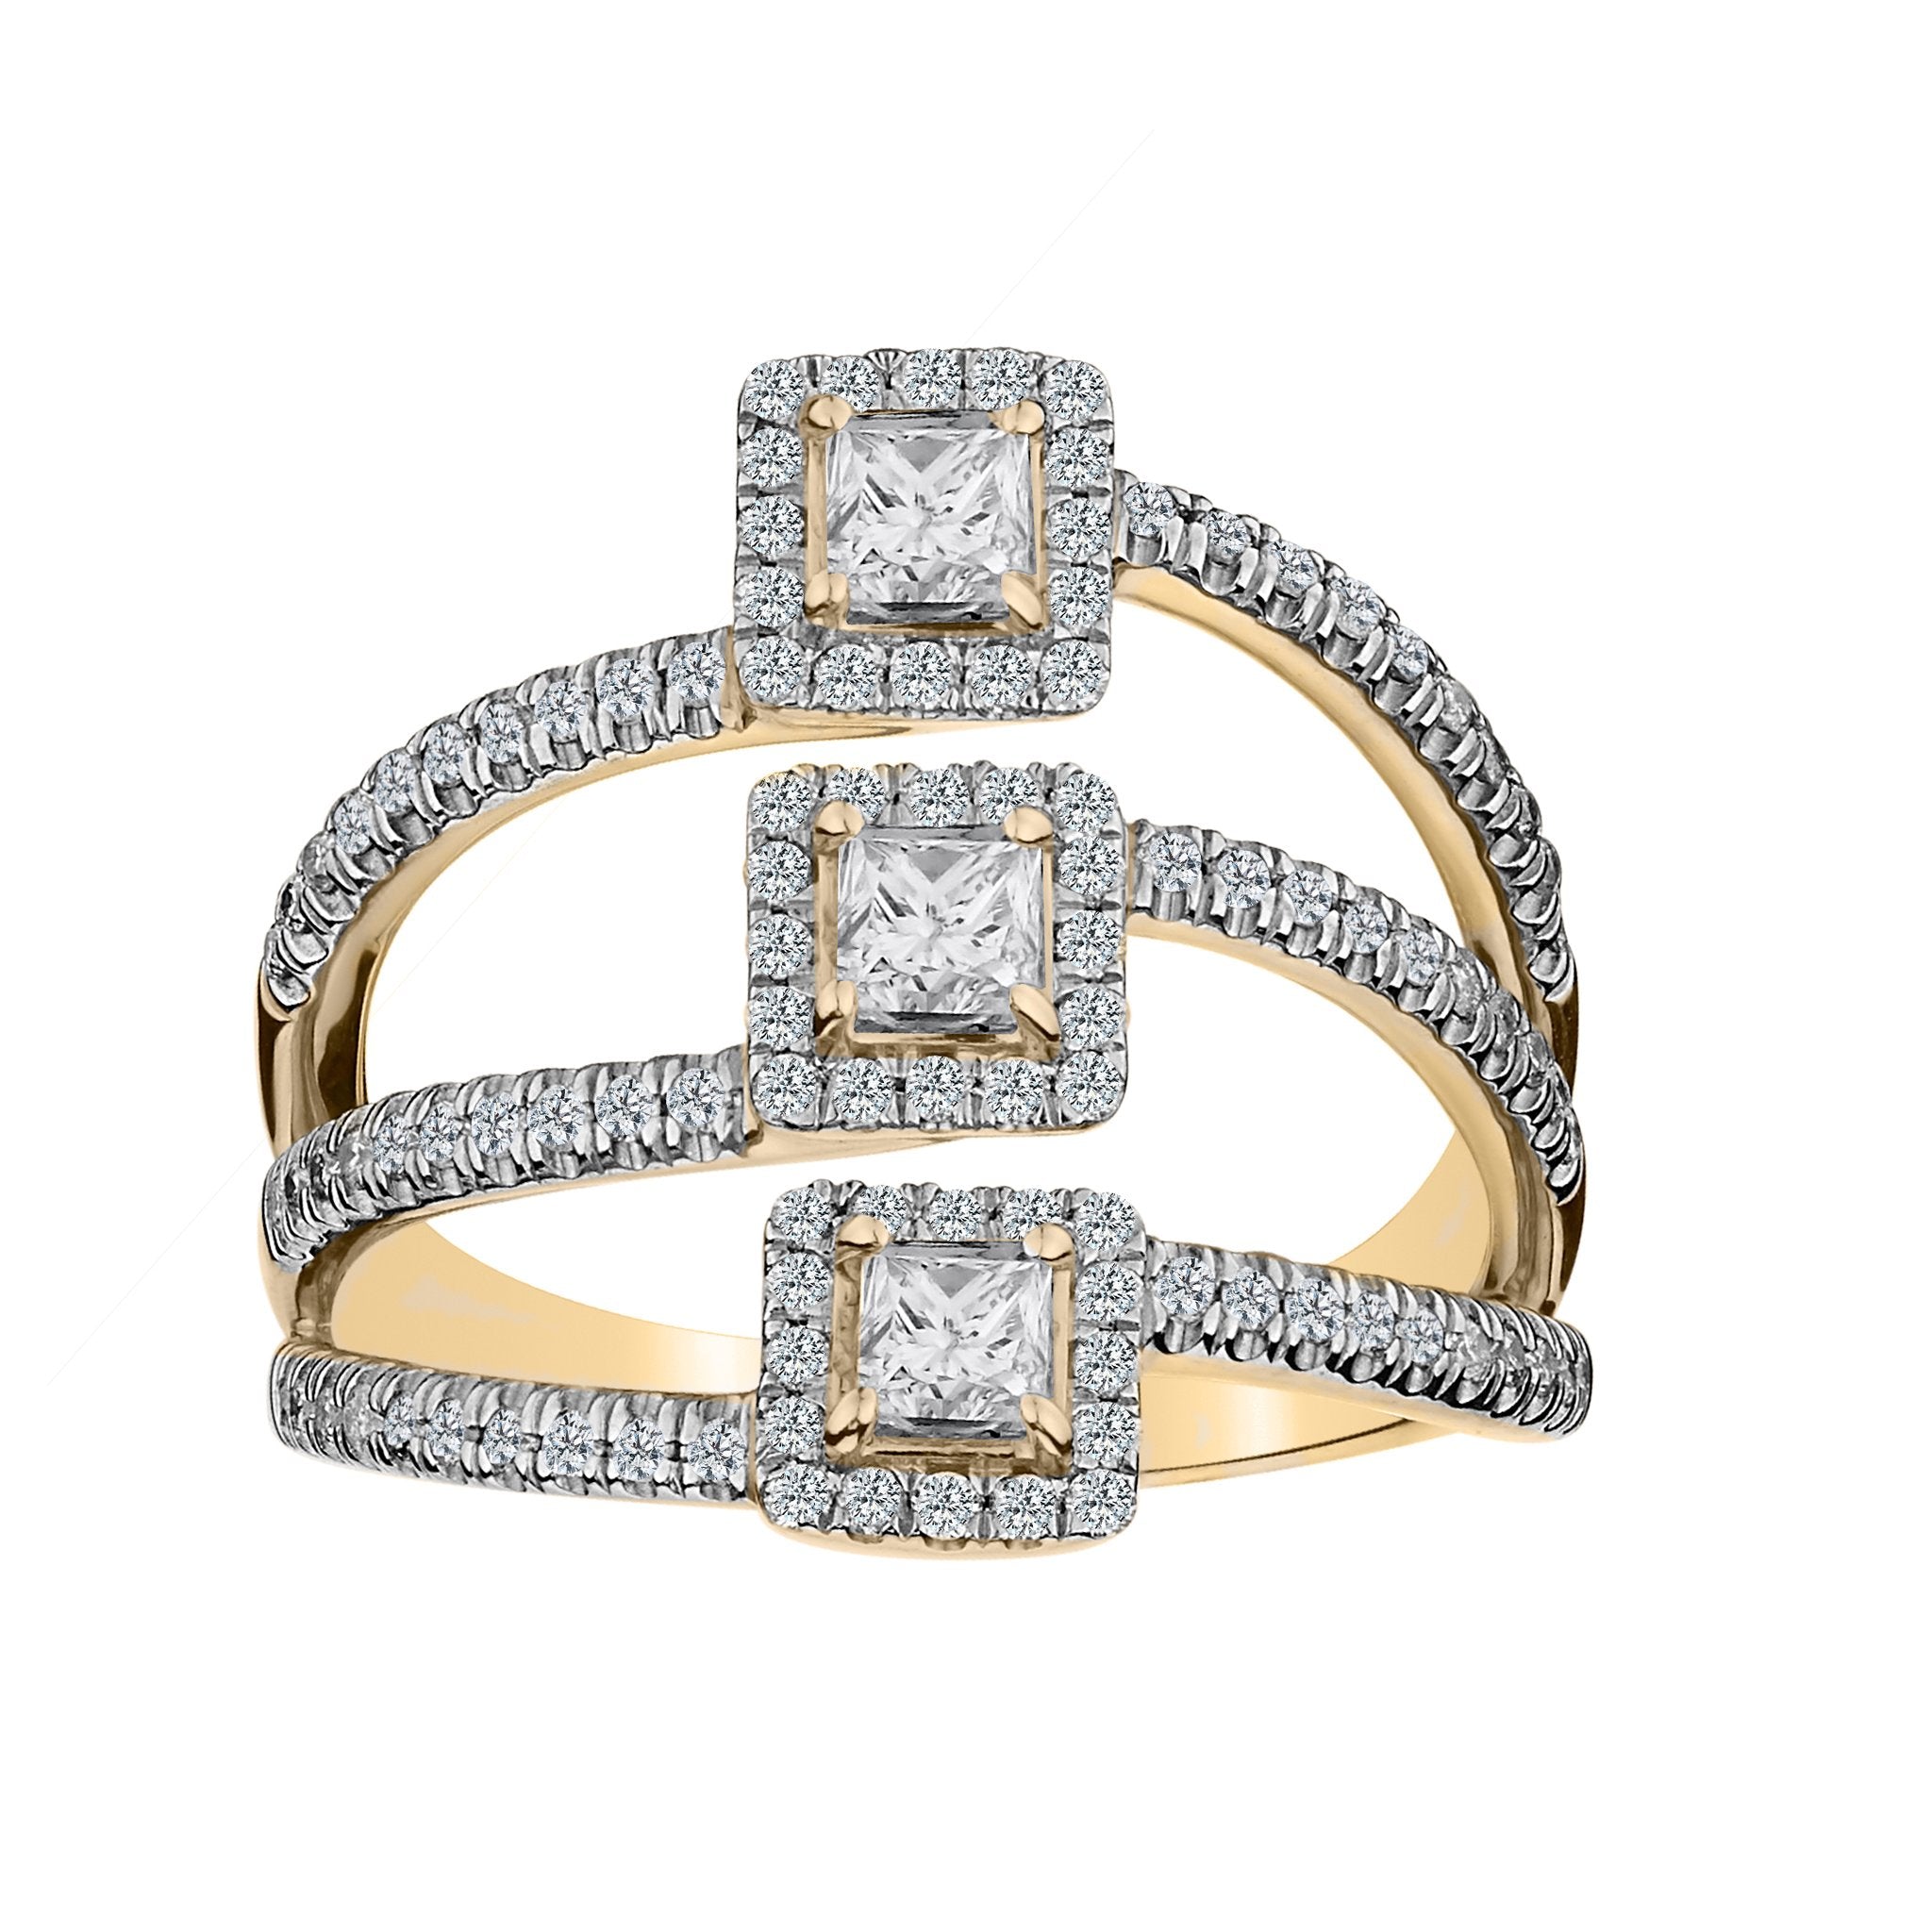 1.25 CARAT DIAMOND "PAST, PRESENT, FUTURE" PRINCESS RING, 14kt YELLOW GOLD.....................NOW - Griffin Jewellery Designs